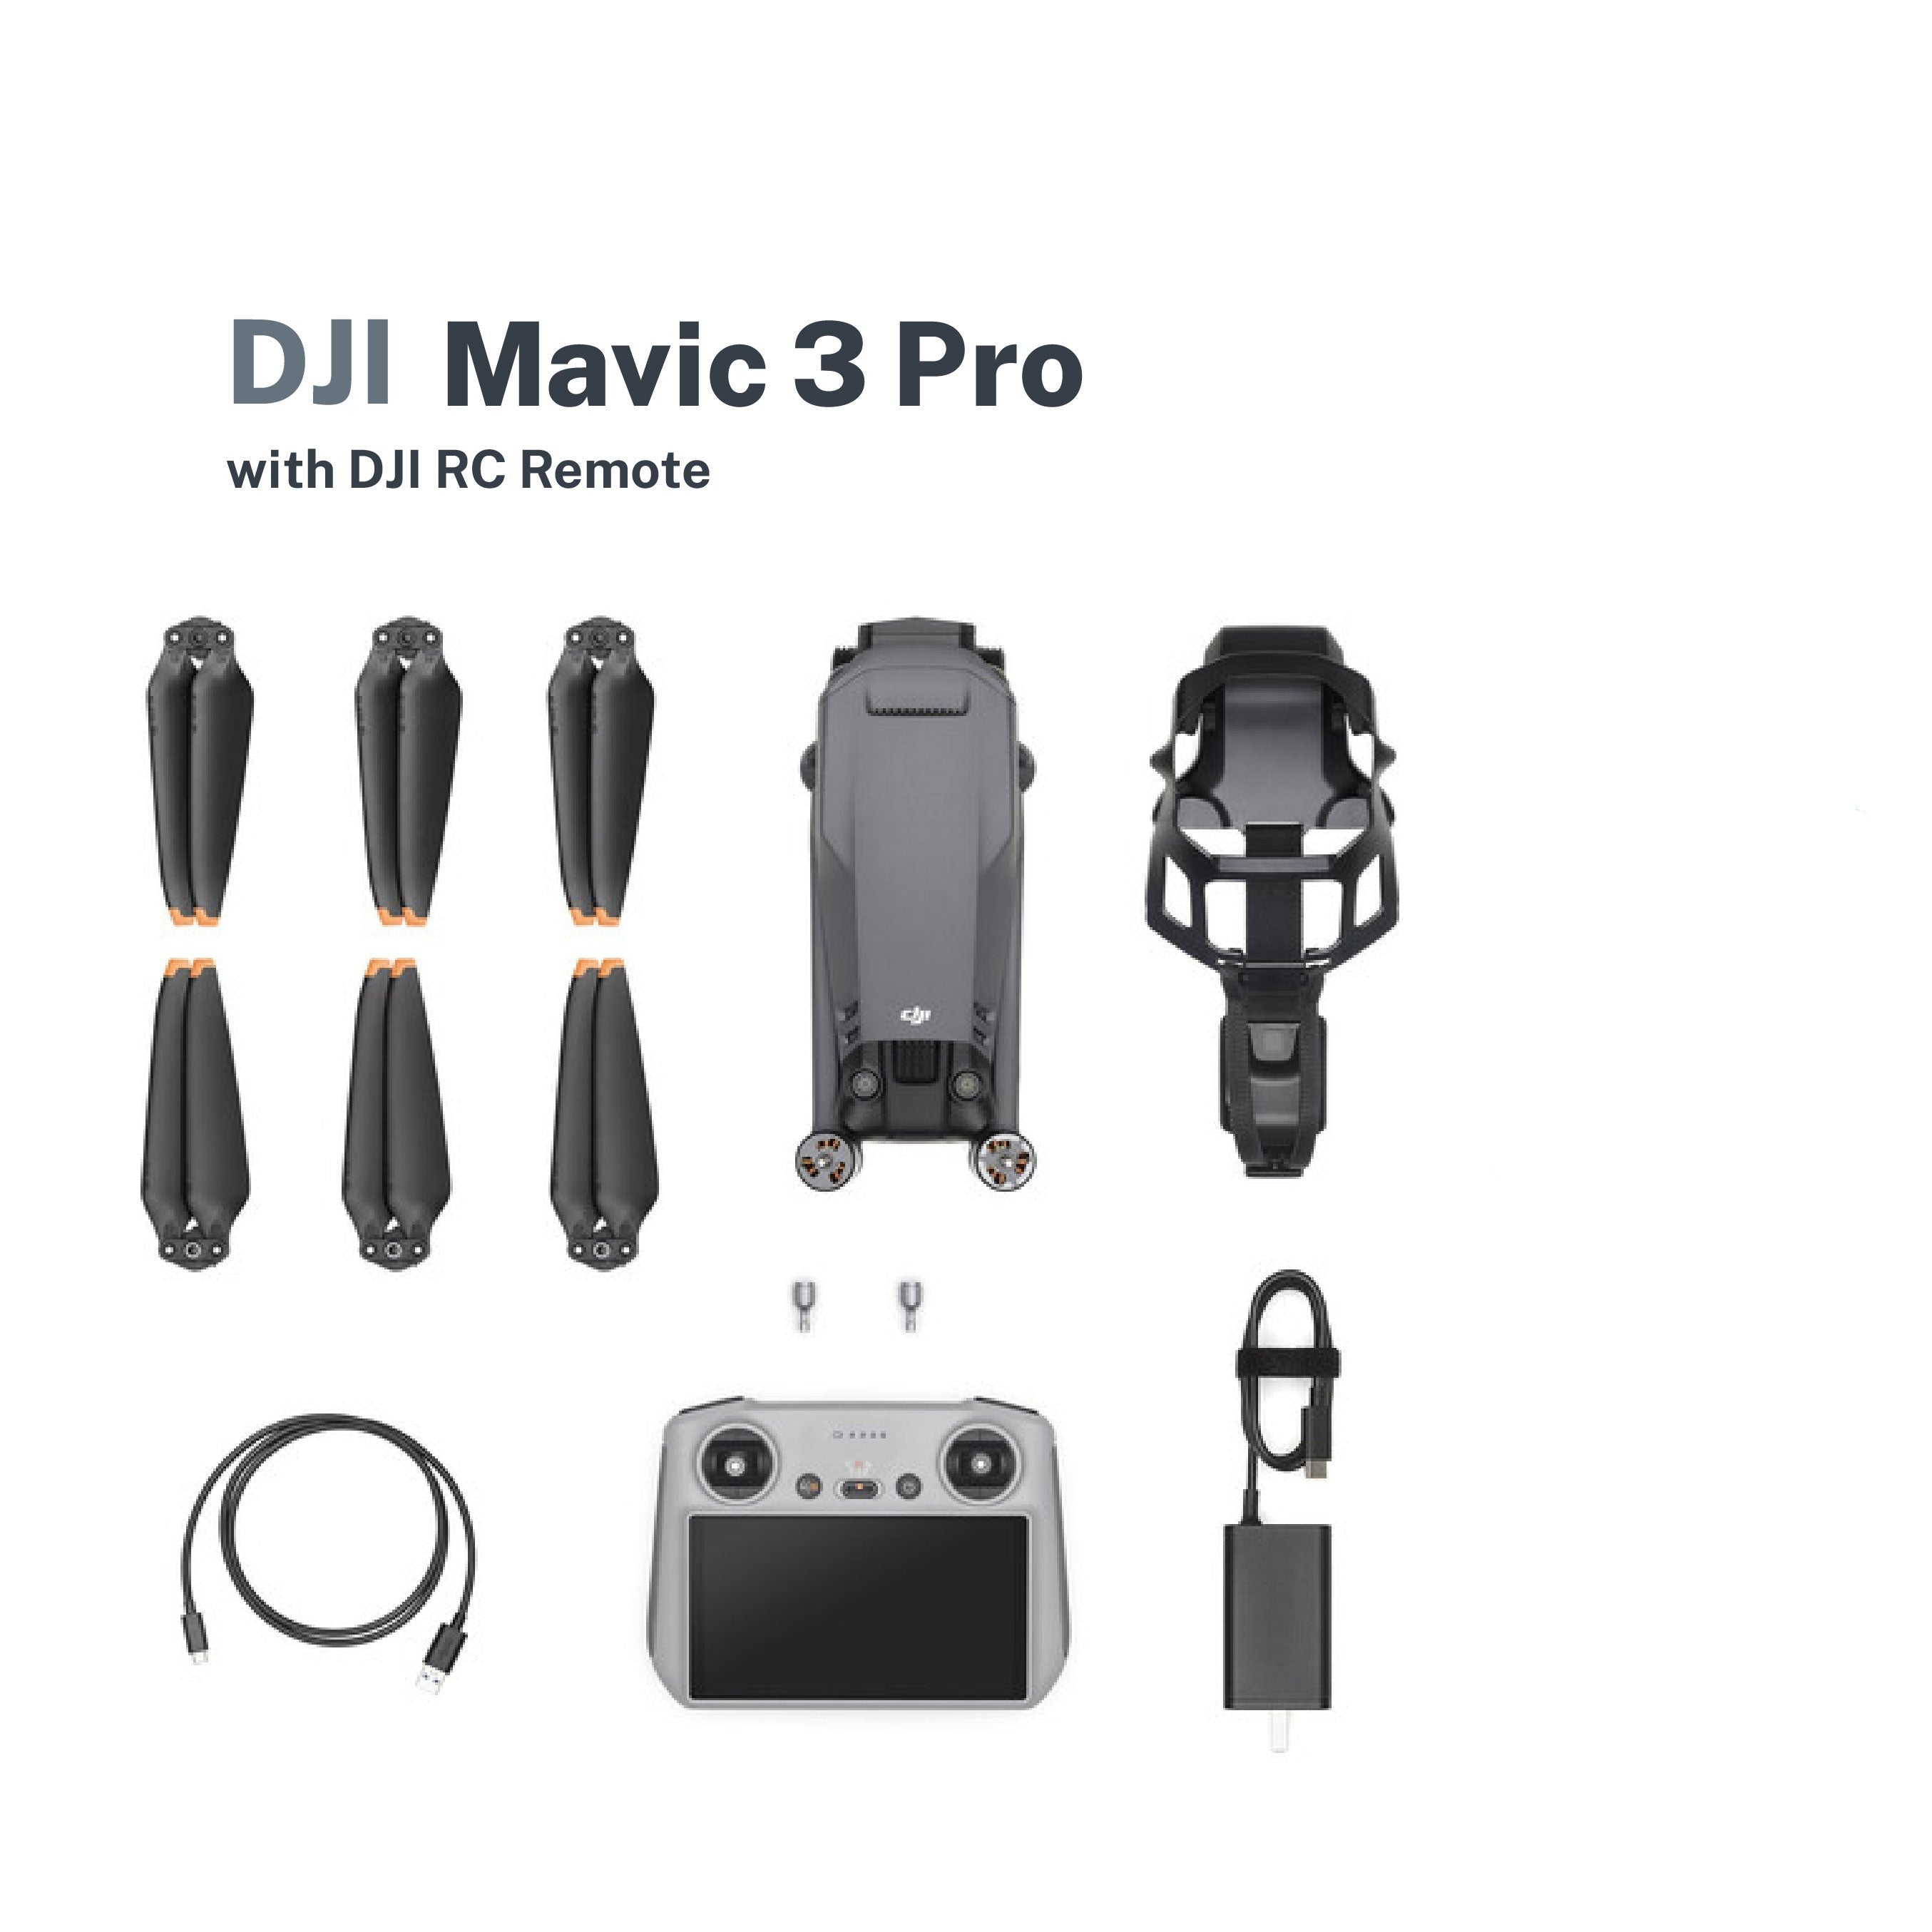 DJI Mavic 3 Pro Drone with DJI RC with Free Sandisk Extreme MicroSD 64